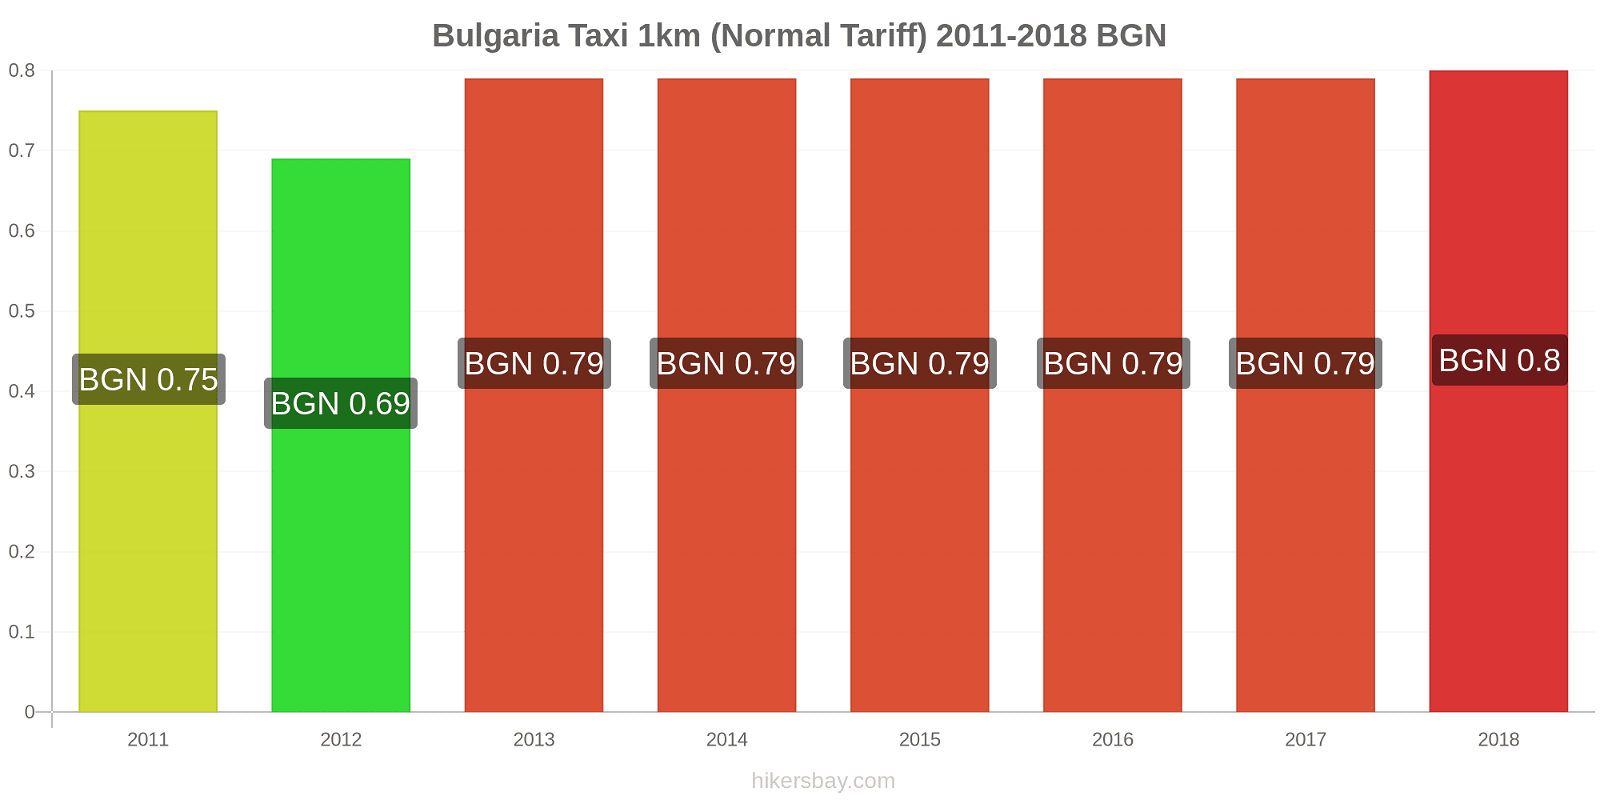 Bulgaria price changes Taxi 1km (Normal Tariff) hikersbay.com